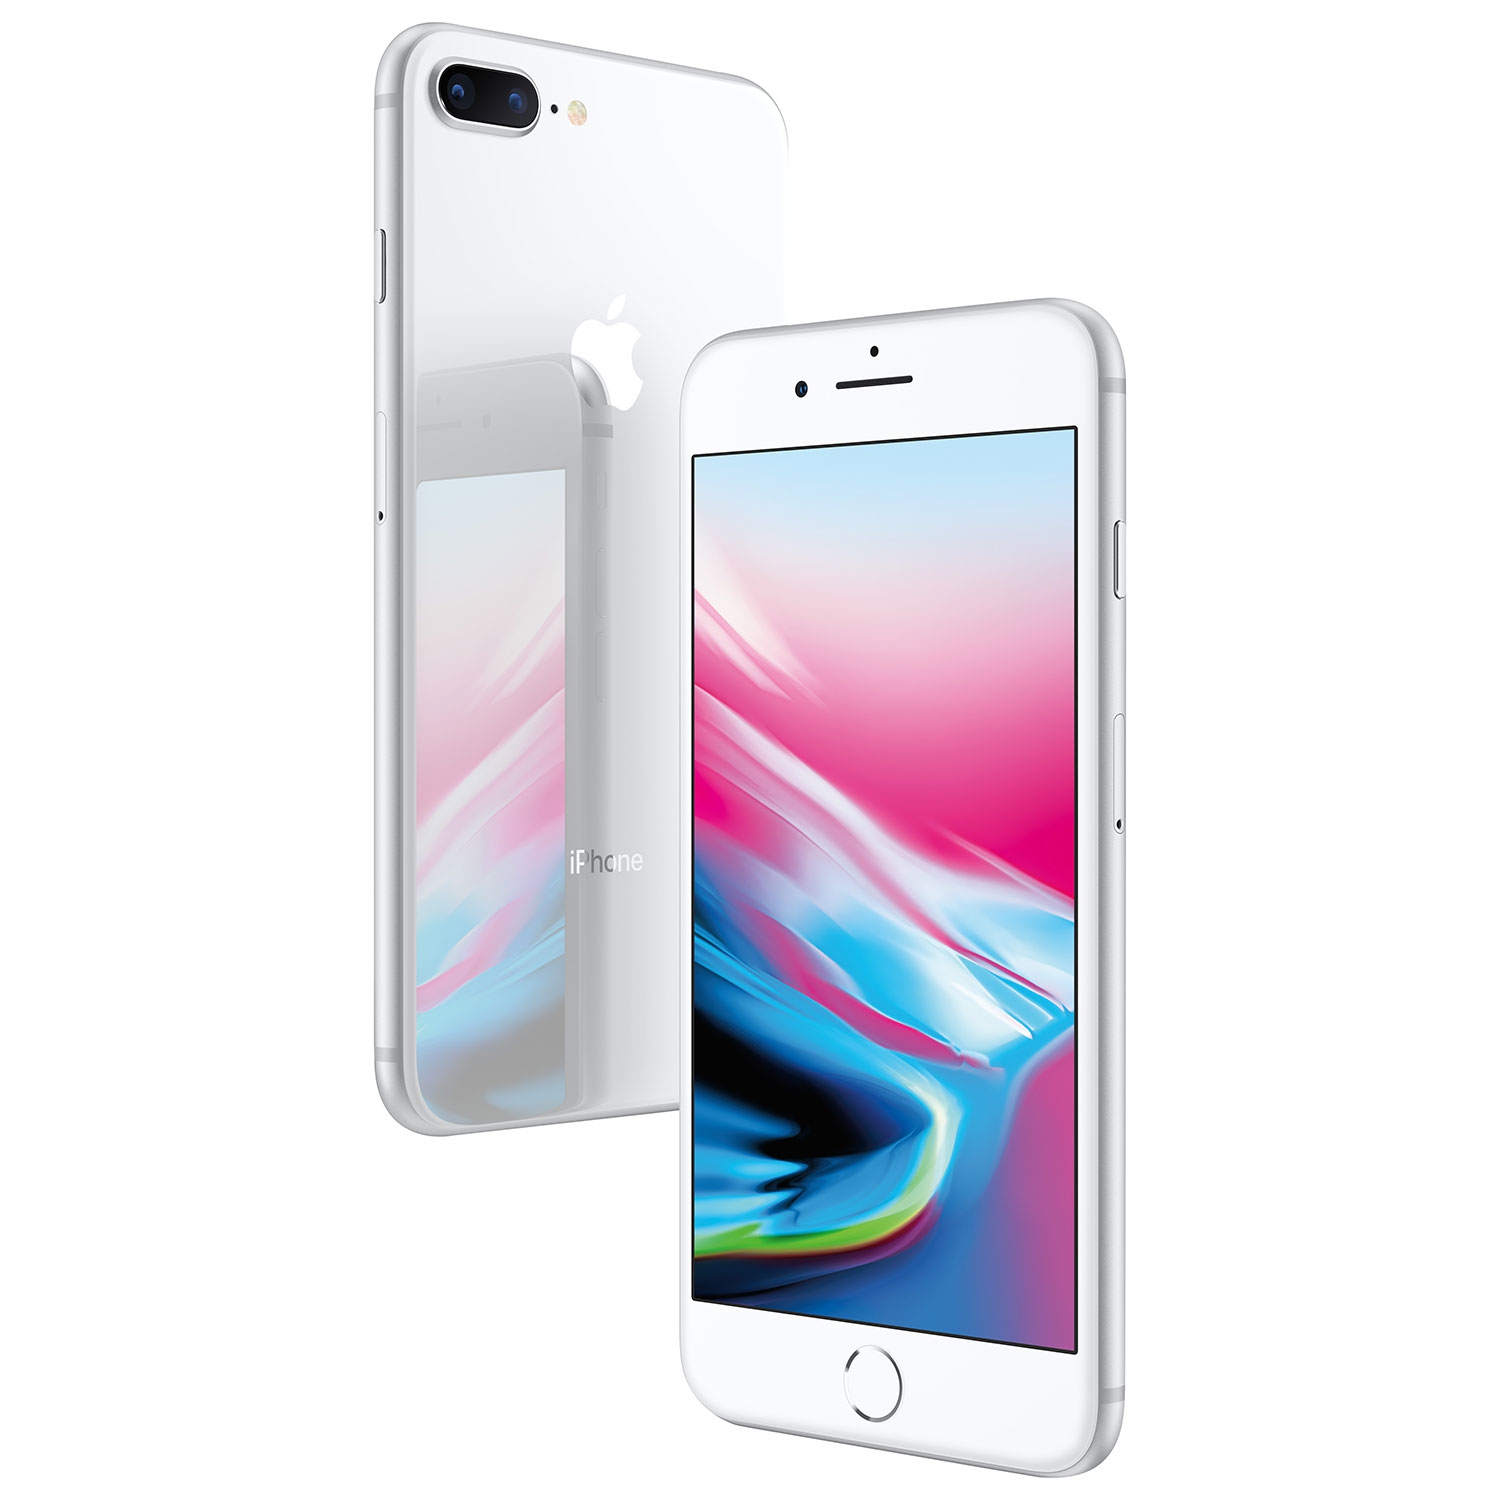 Apple iPhone 8 Plus 64GB Smartphone - Silver - Unlocked - Recertified